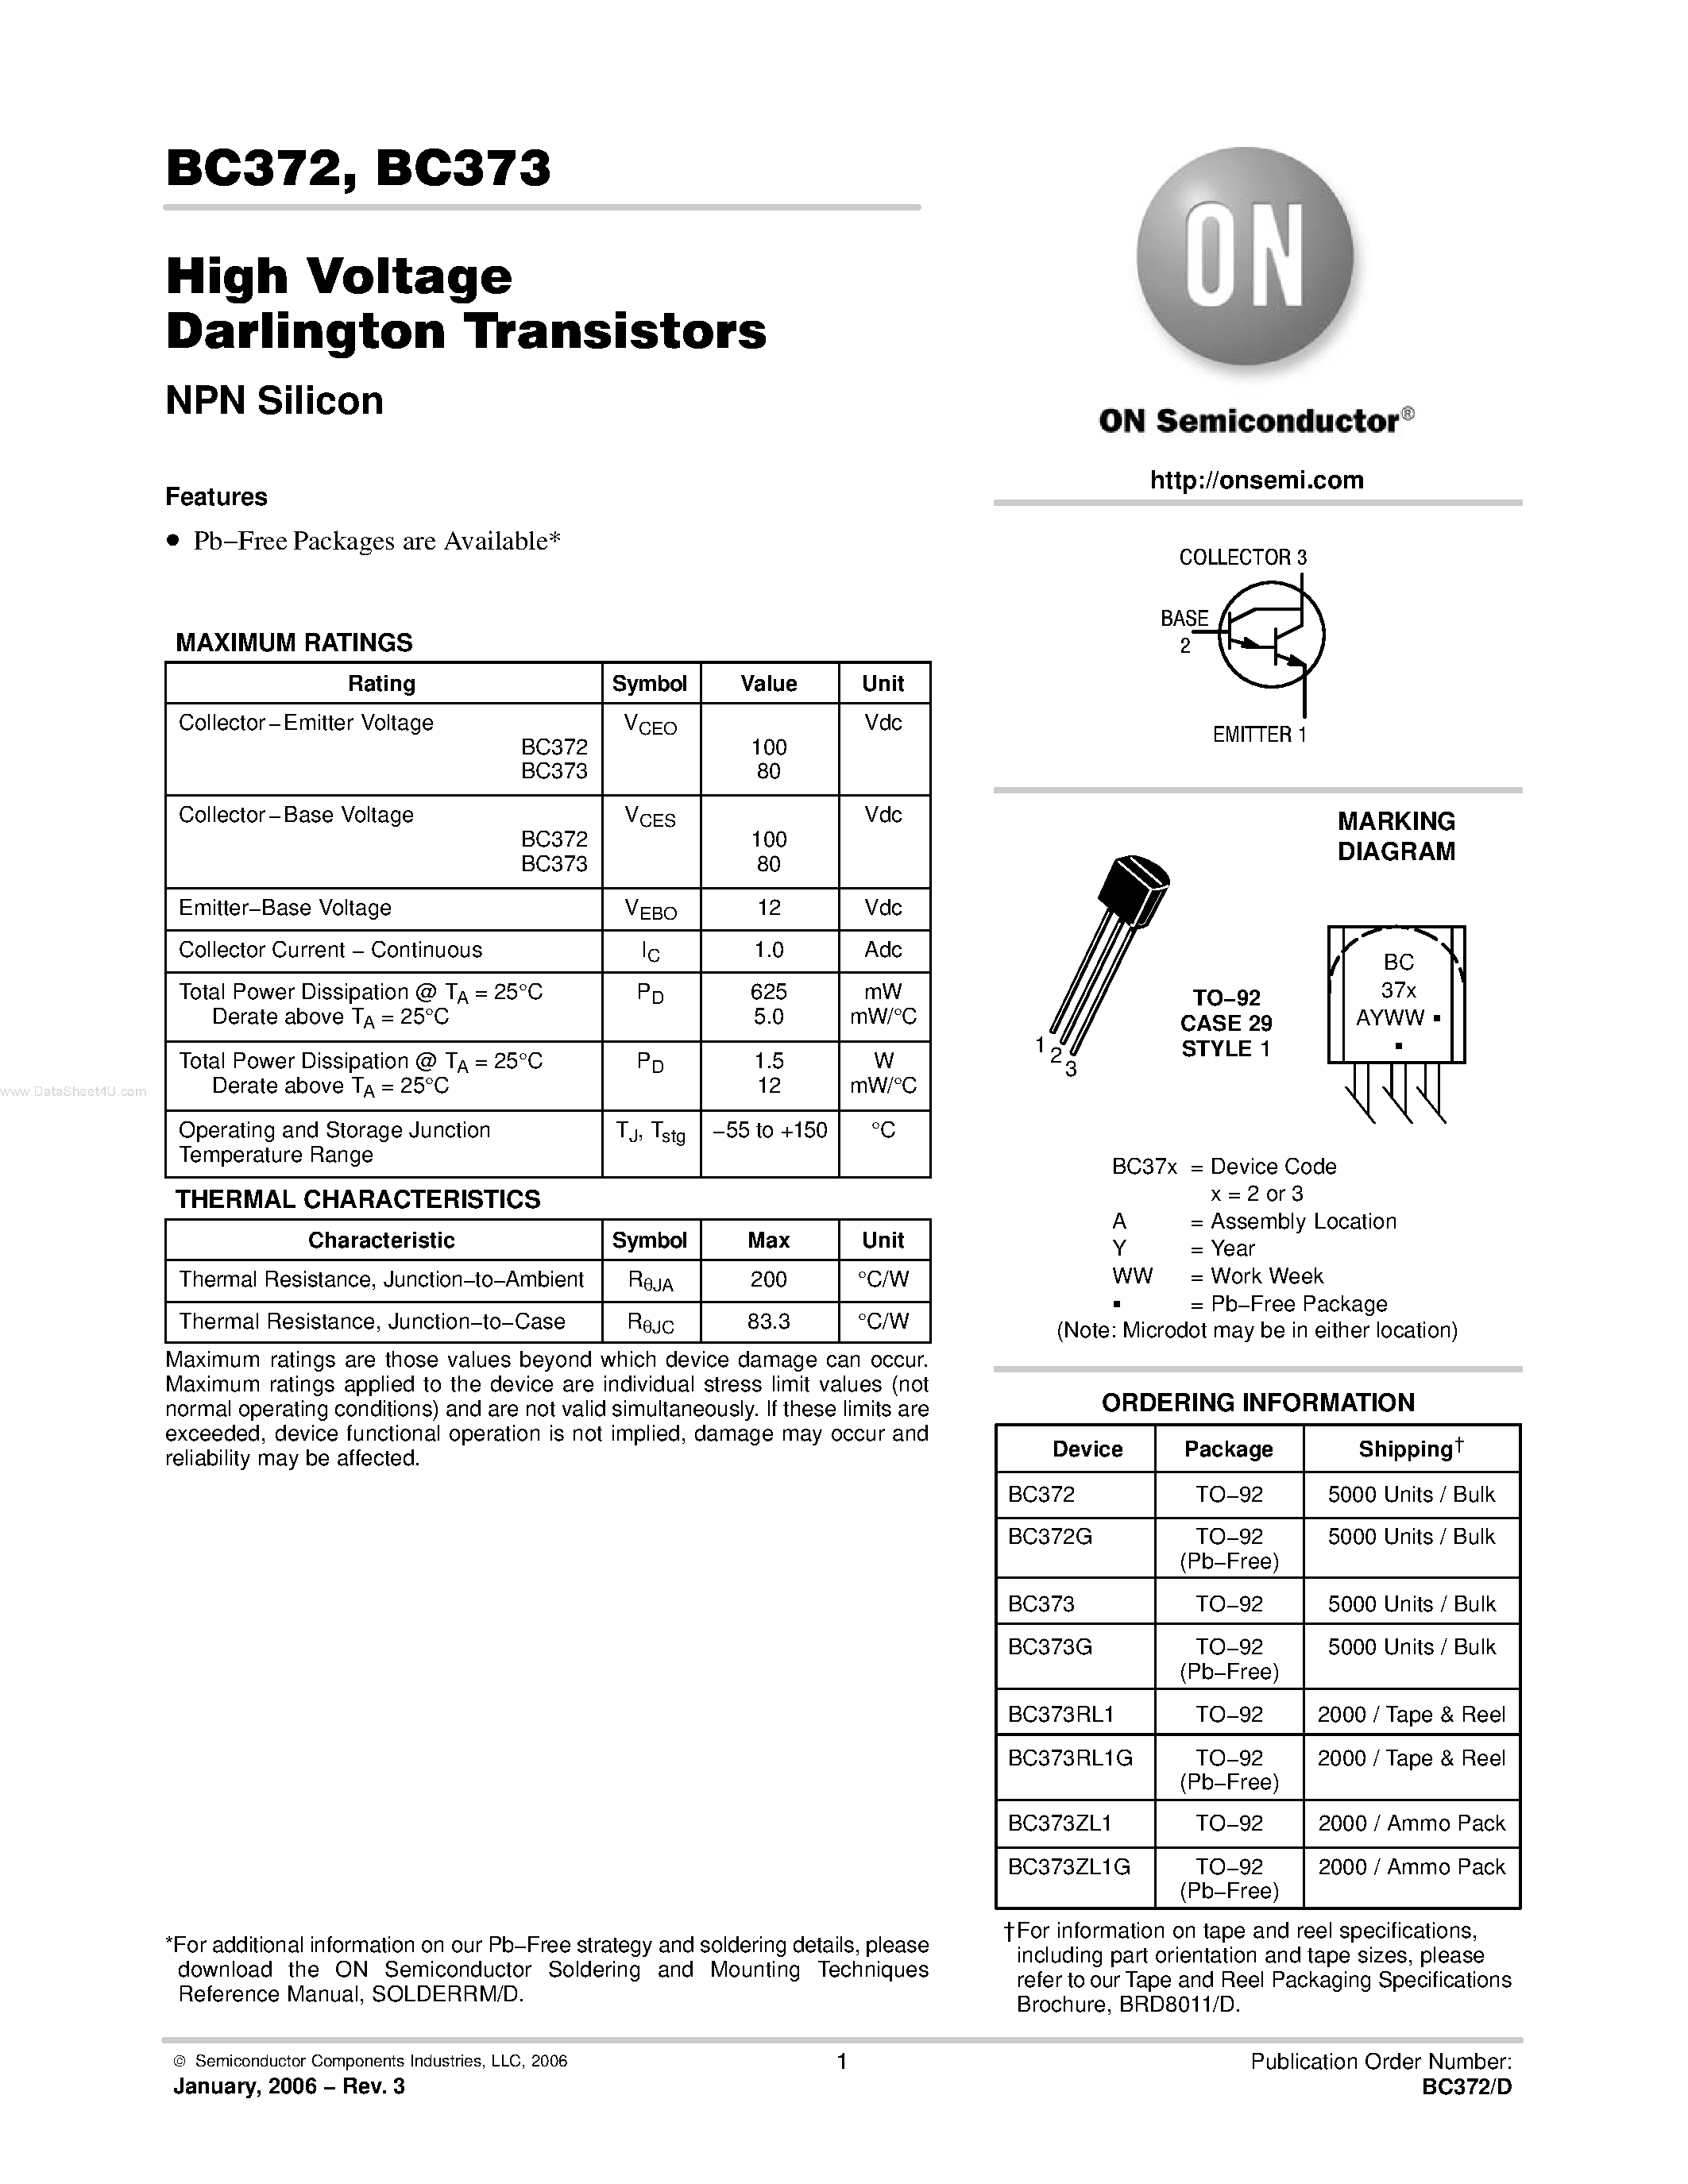 Datasheet BC372 - High Voltage Darlington Transistors(NPN Silicon) page 1